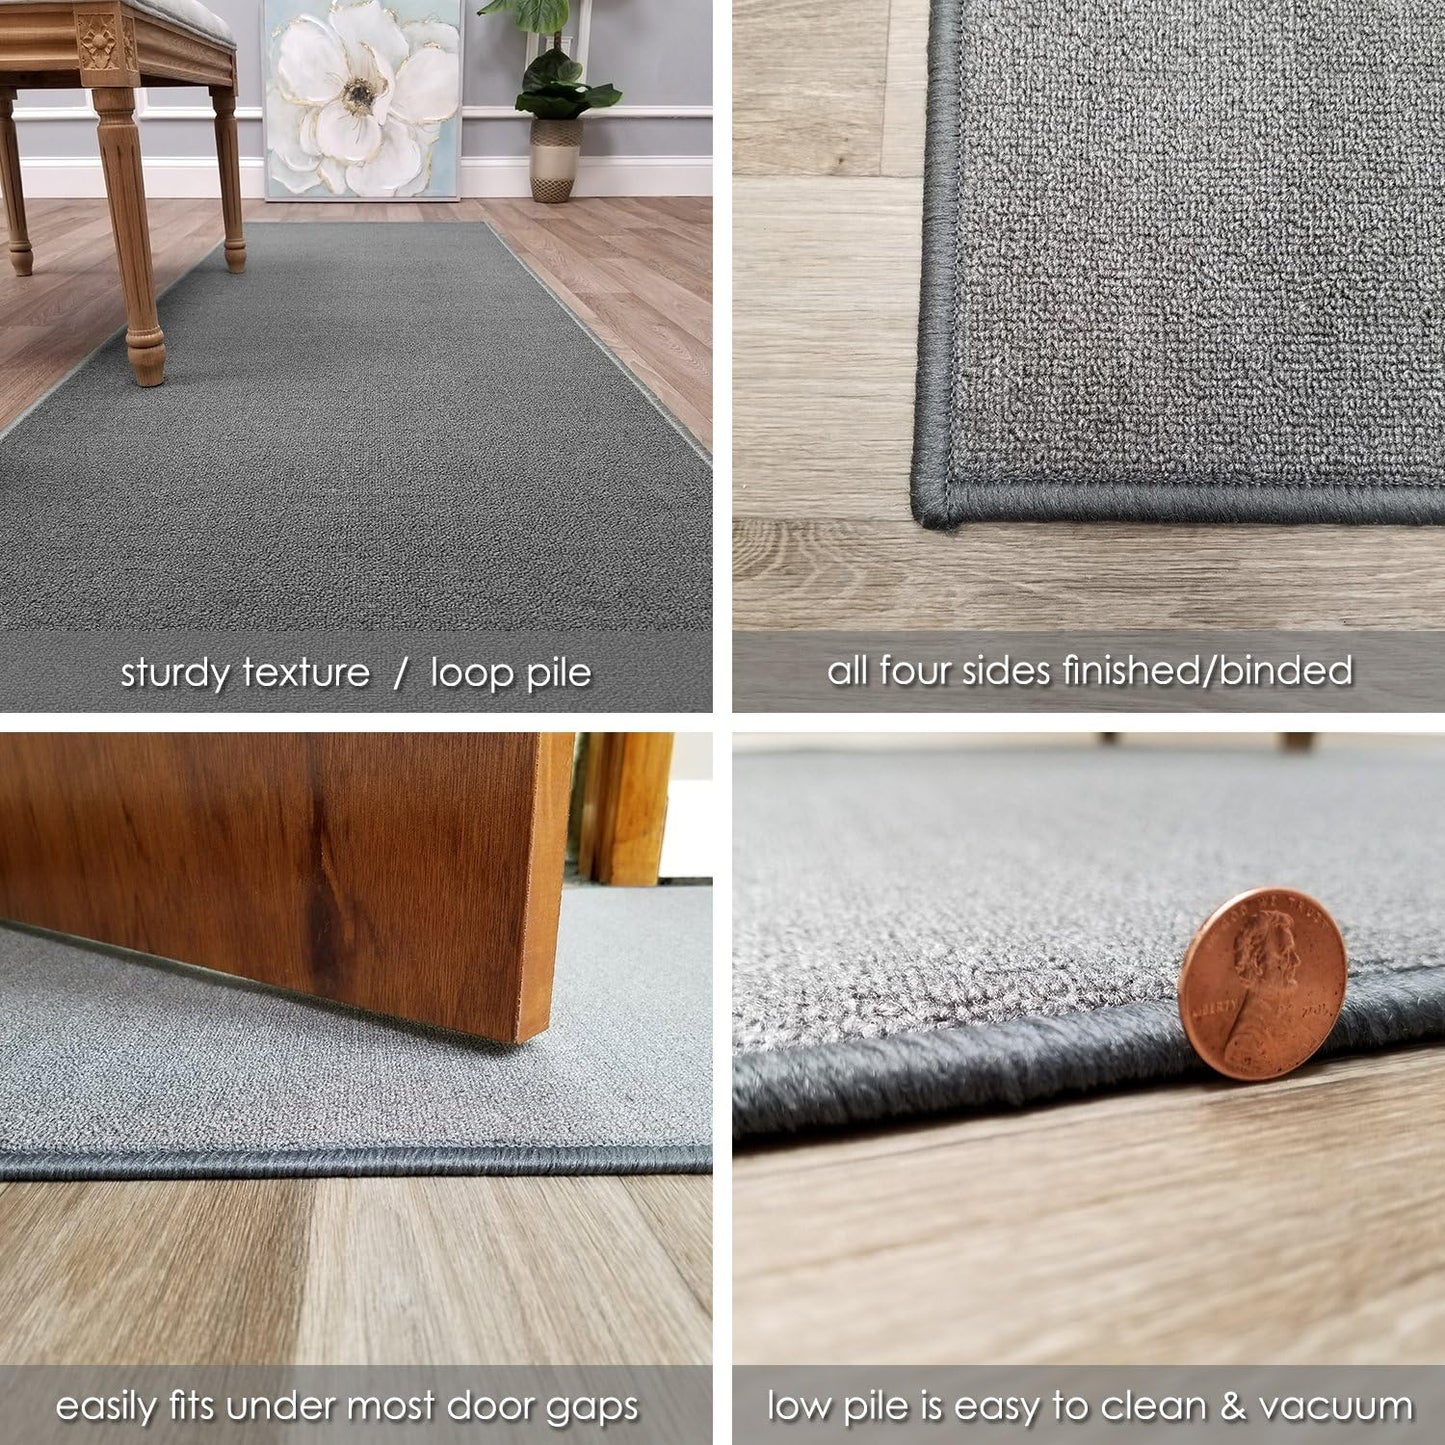 New Custom Size Solid Plain Rubber Backed Non-Slip Hallway Stair Runner Rug Carpet Grey, 22in x 5ft